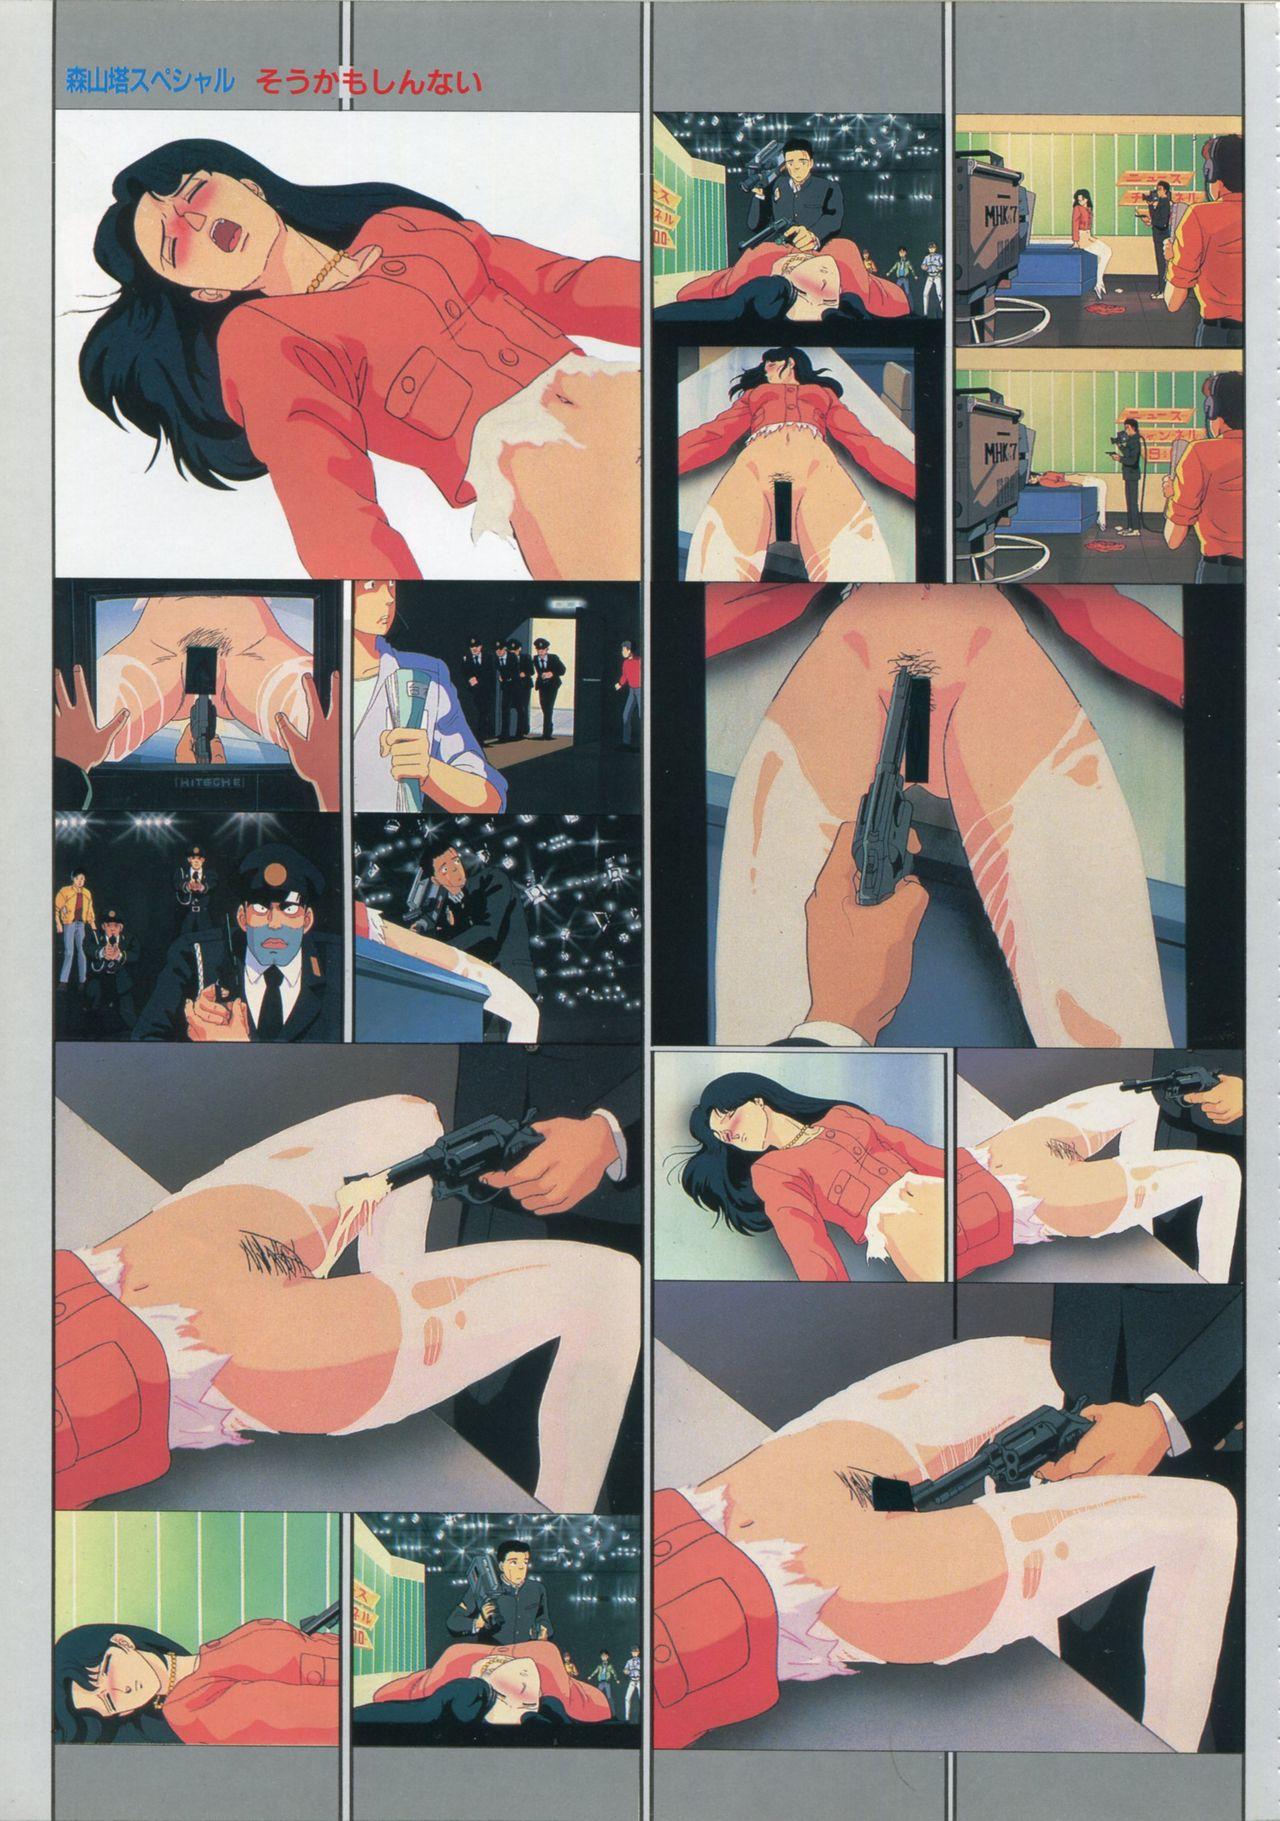 Bishoujo Anime Daizenshuu - Adult Animation Video Catalog 1991 34